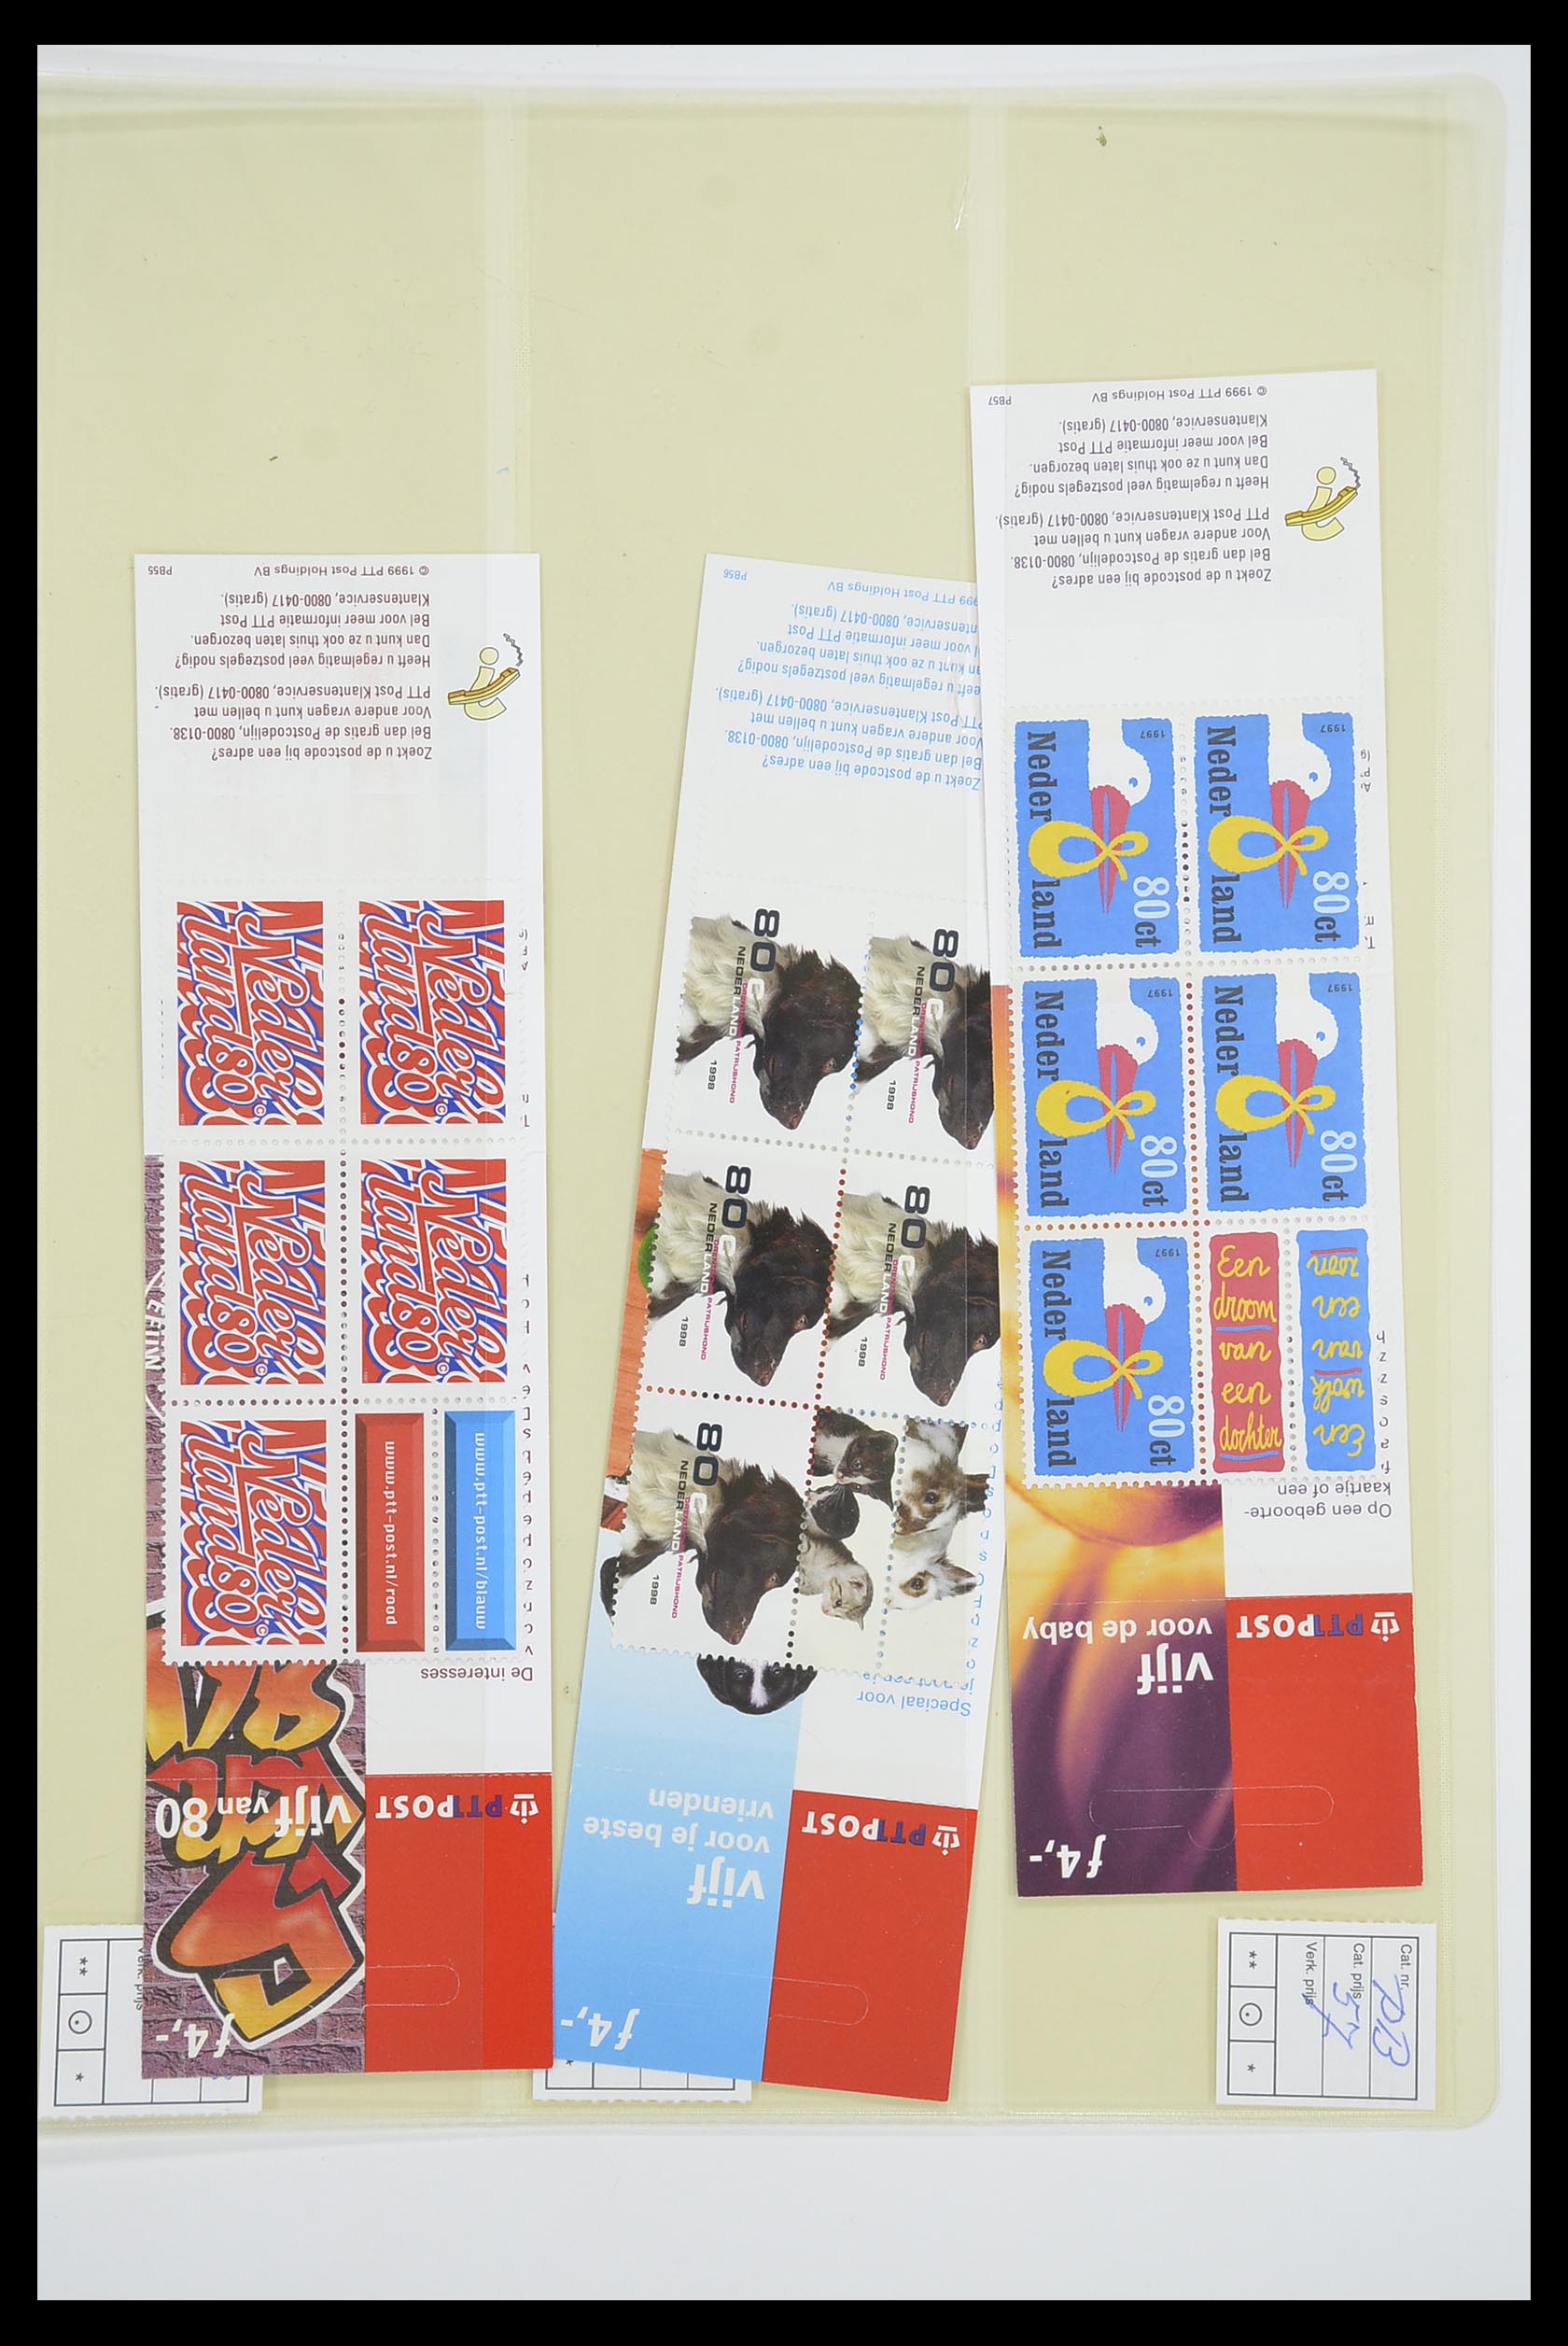 33815 074 - Stamp collection 33815 Netherlands stamp booklets 1964-2001.